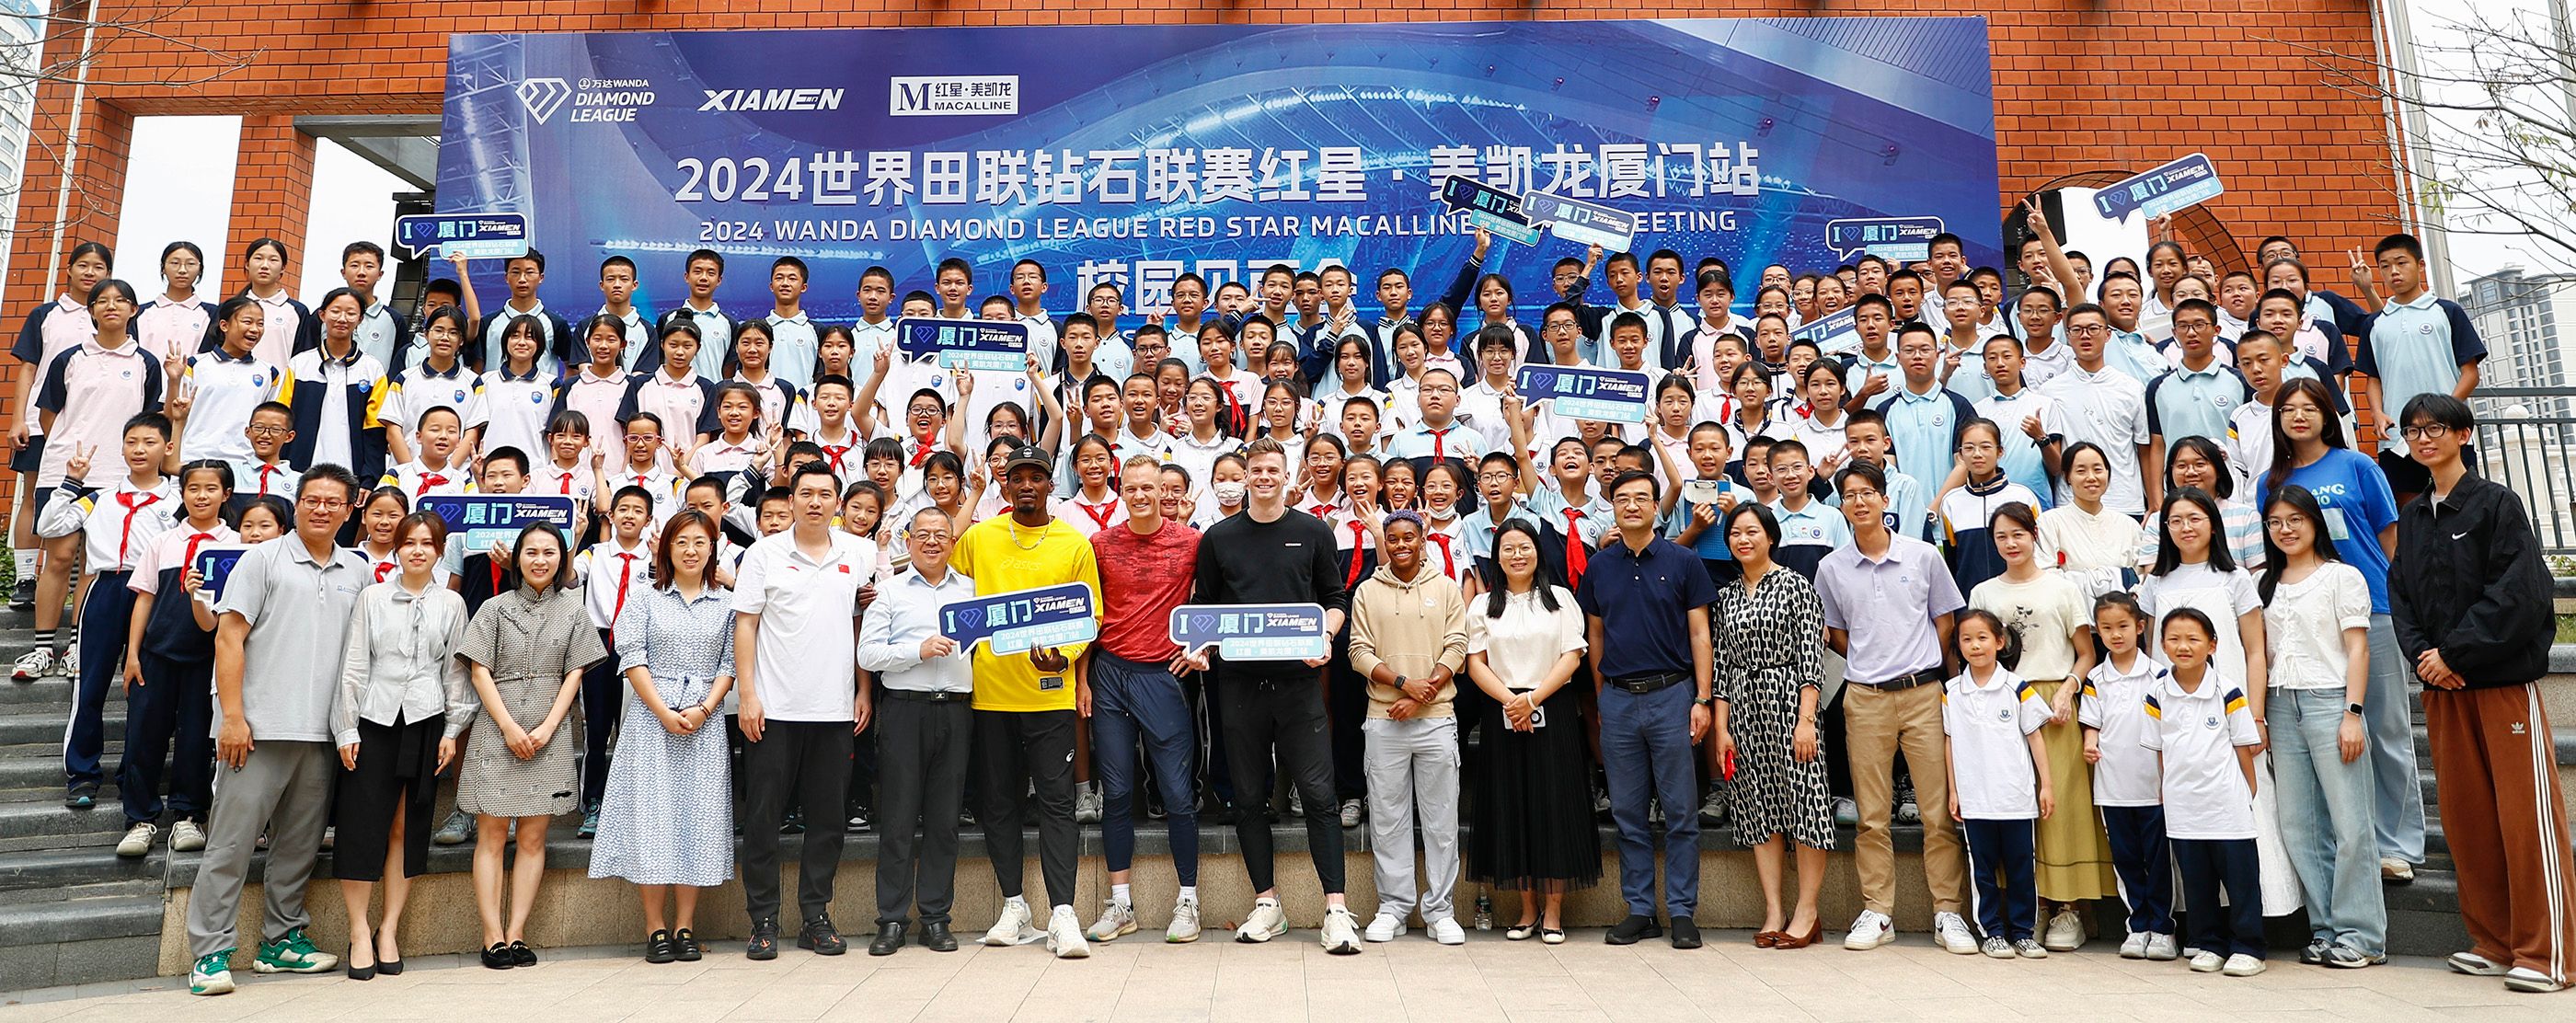 Fred Kerley, Sam Kendricks, Chris Nilsen and Devynne Charlton during a school visit in Xiamen